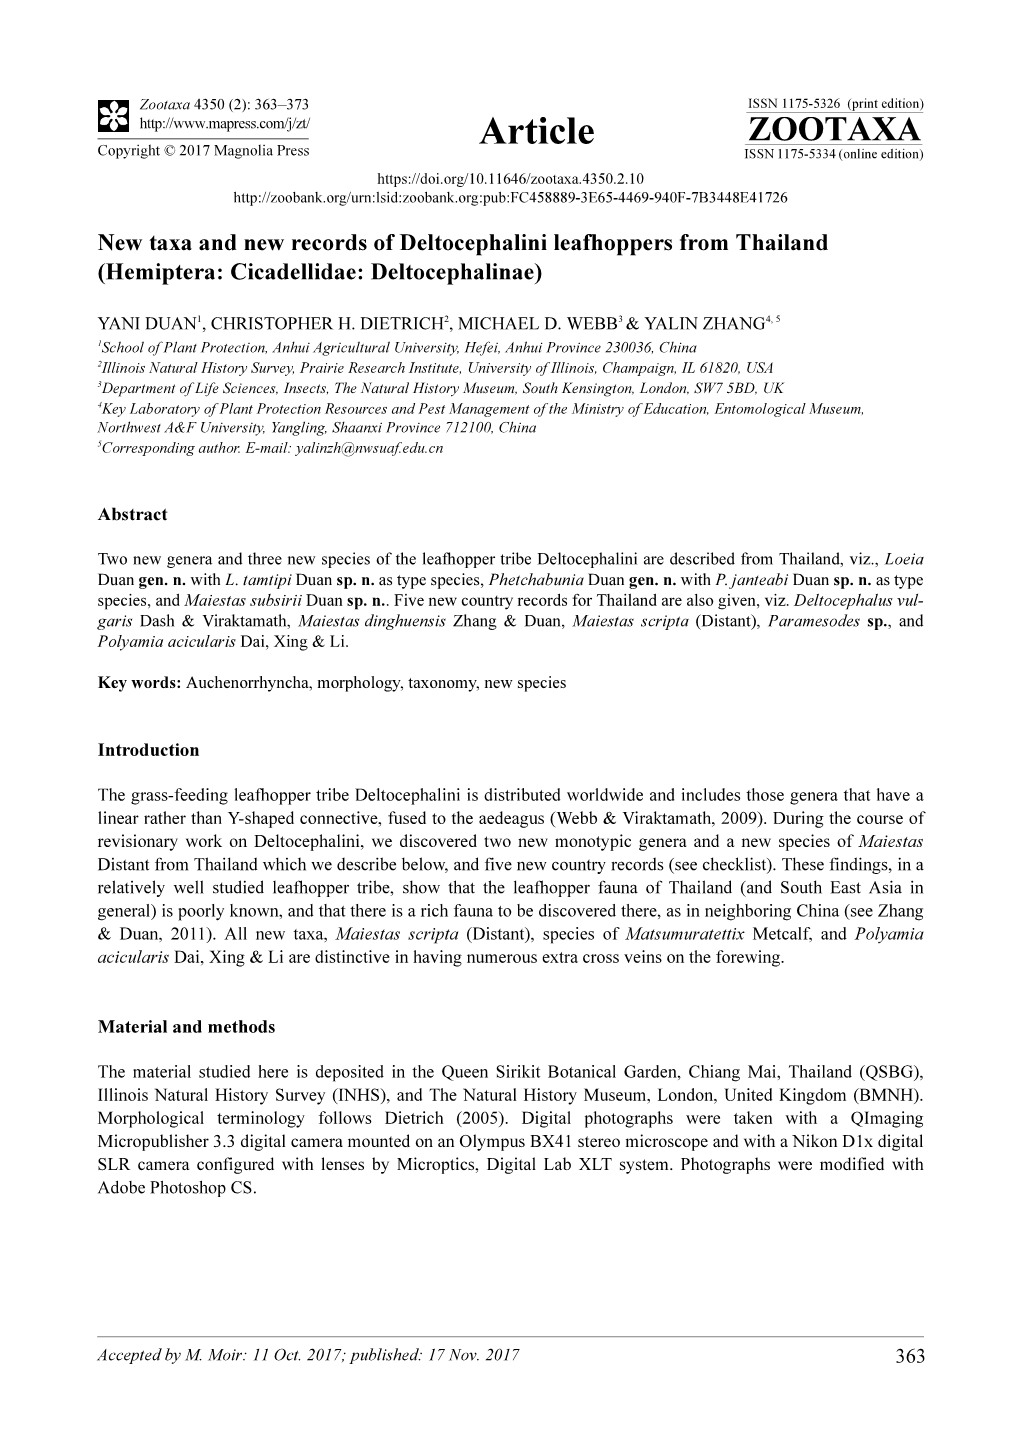 New Taxa and New Records of Deltocephalini Leafhoppers from Thailand (Hemiptera: Cicadellidae: Deltocephalinae)